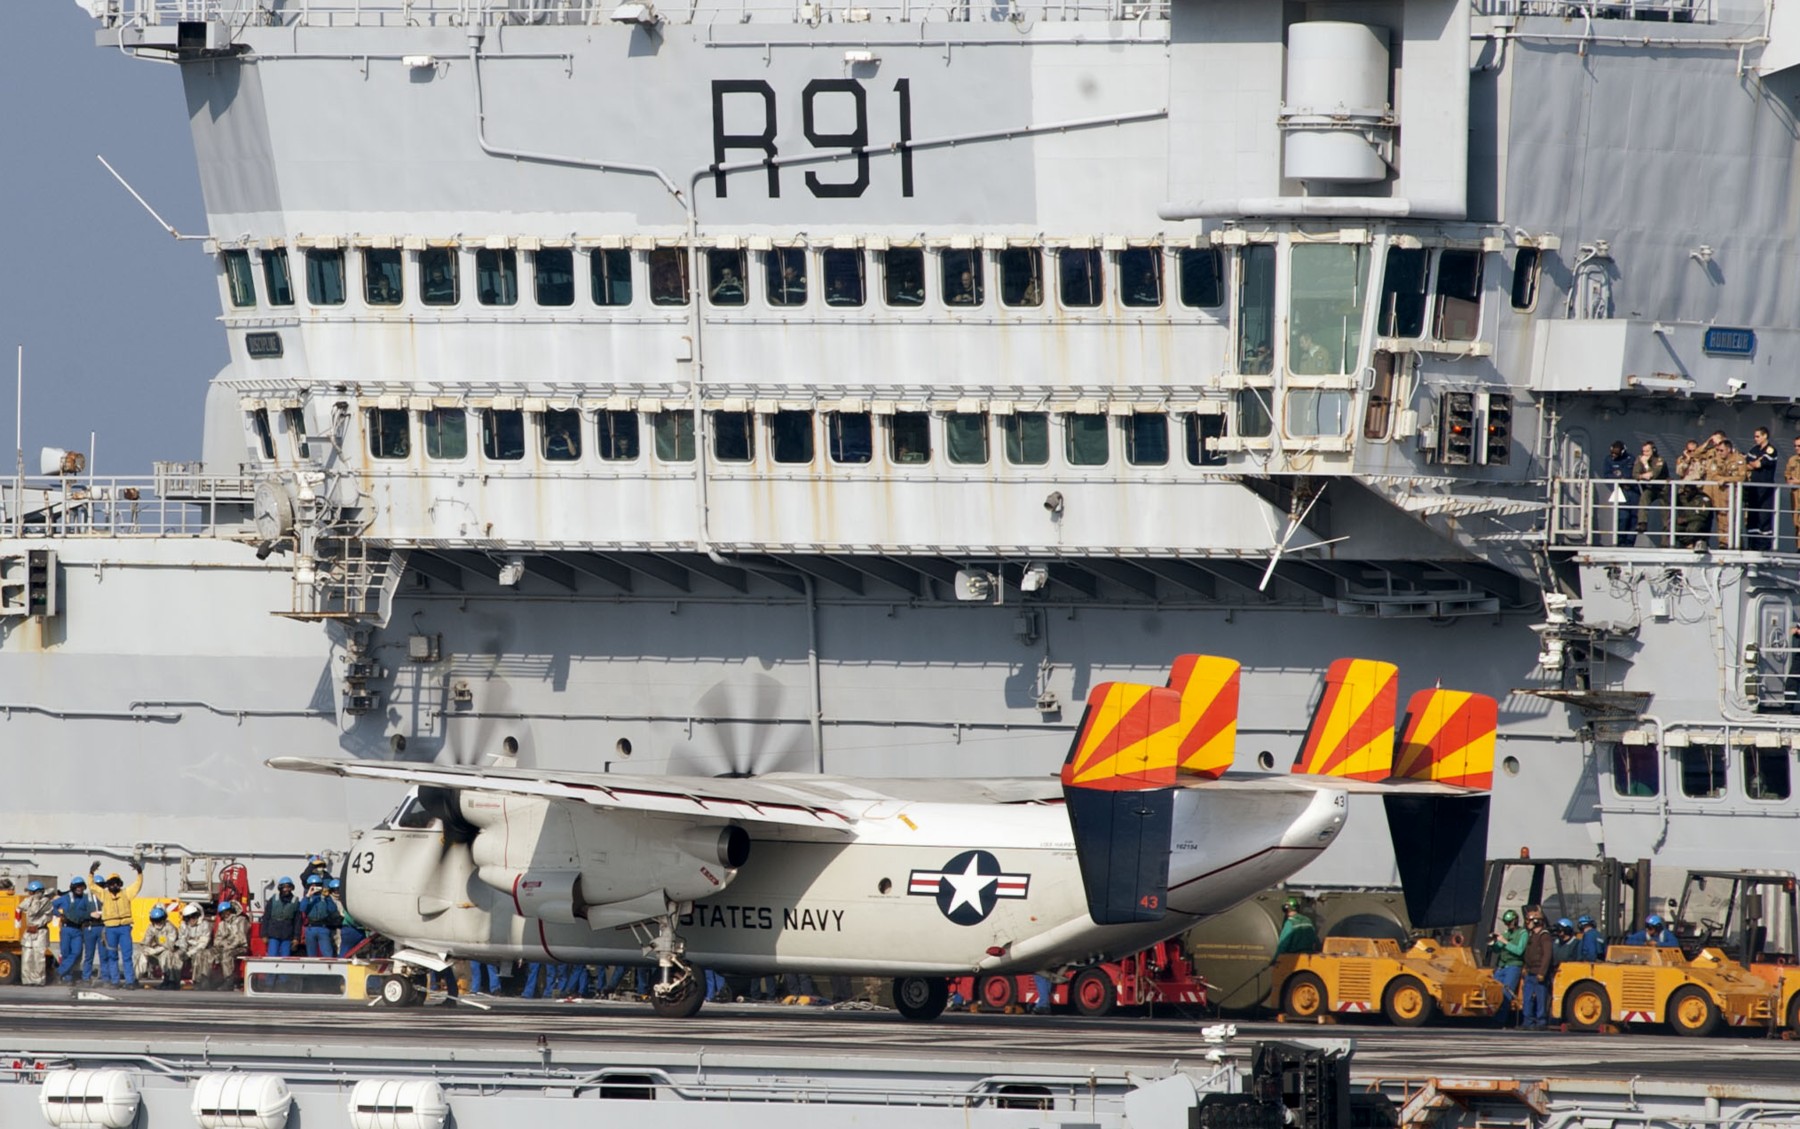 vrc-40 rawhides fleet logistics support squadron flelogsupron us navy grumman c-2a greyhound fs charles de gaulle r-91 162